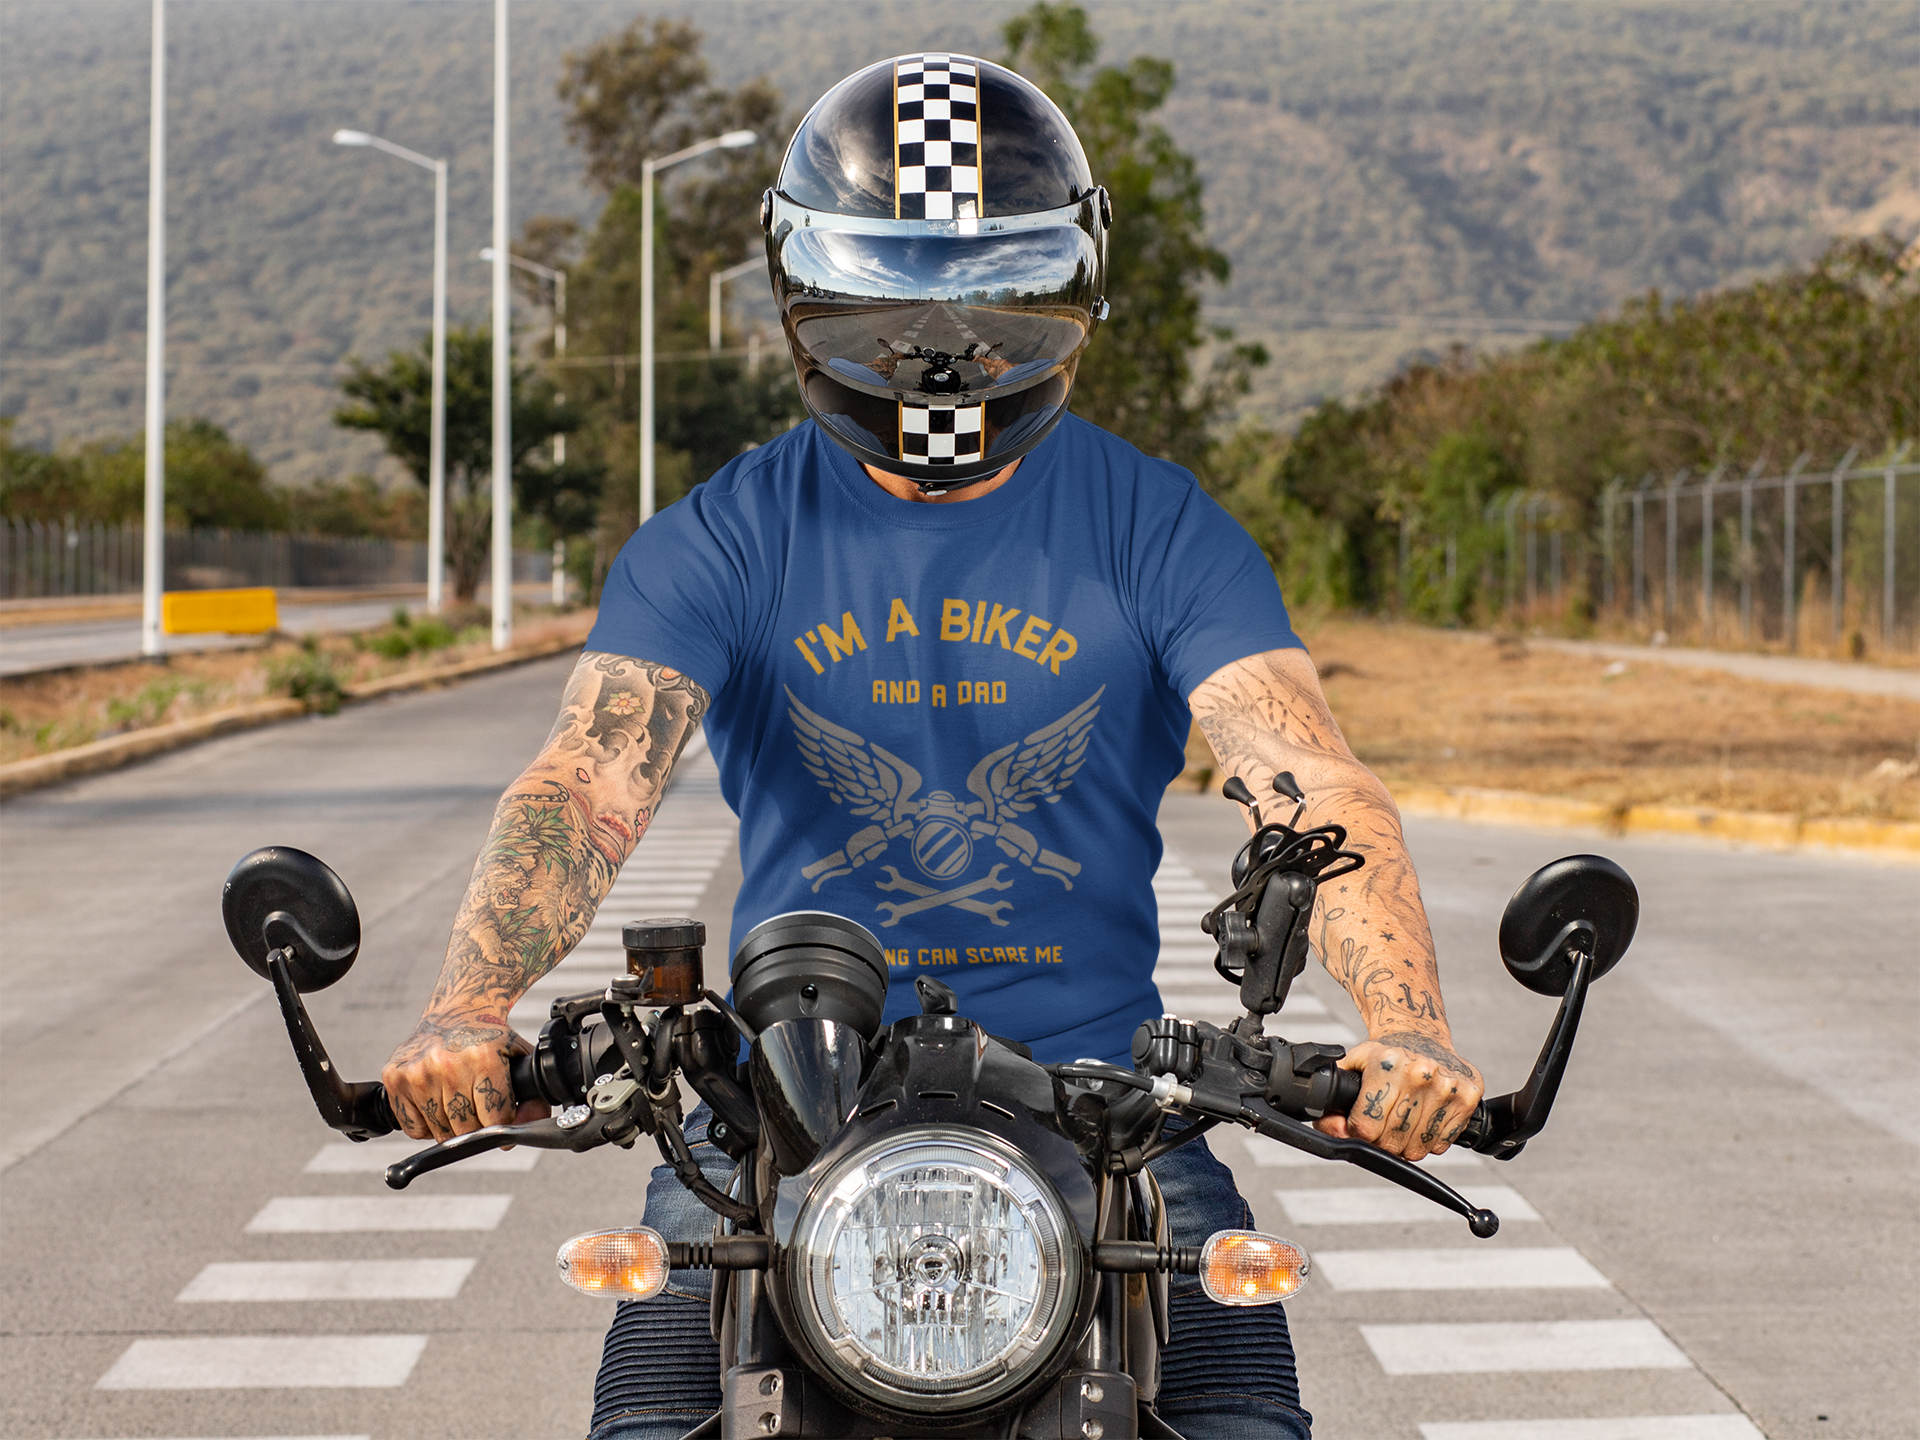 "I'm a biker and a dad" Short-Sleeve Unisex T-Shirt